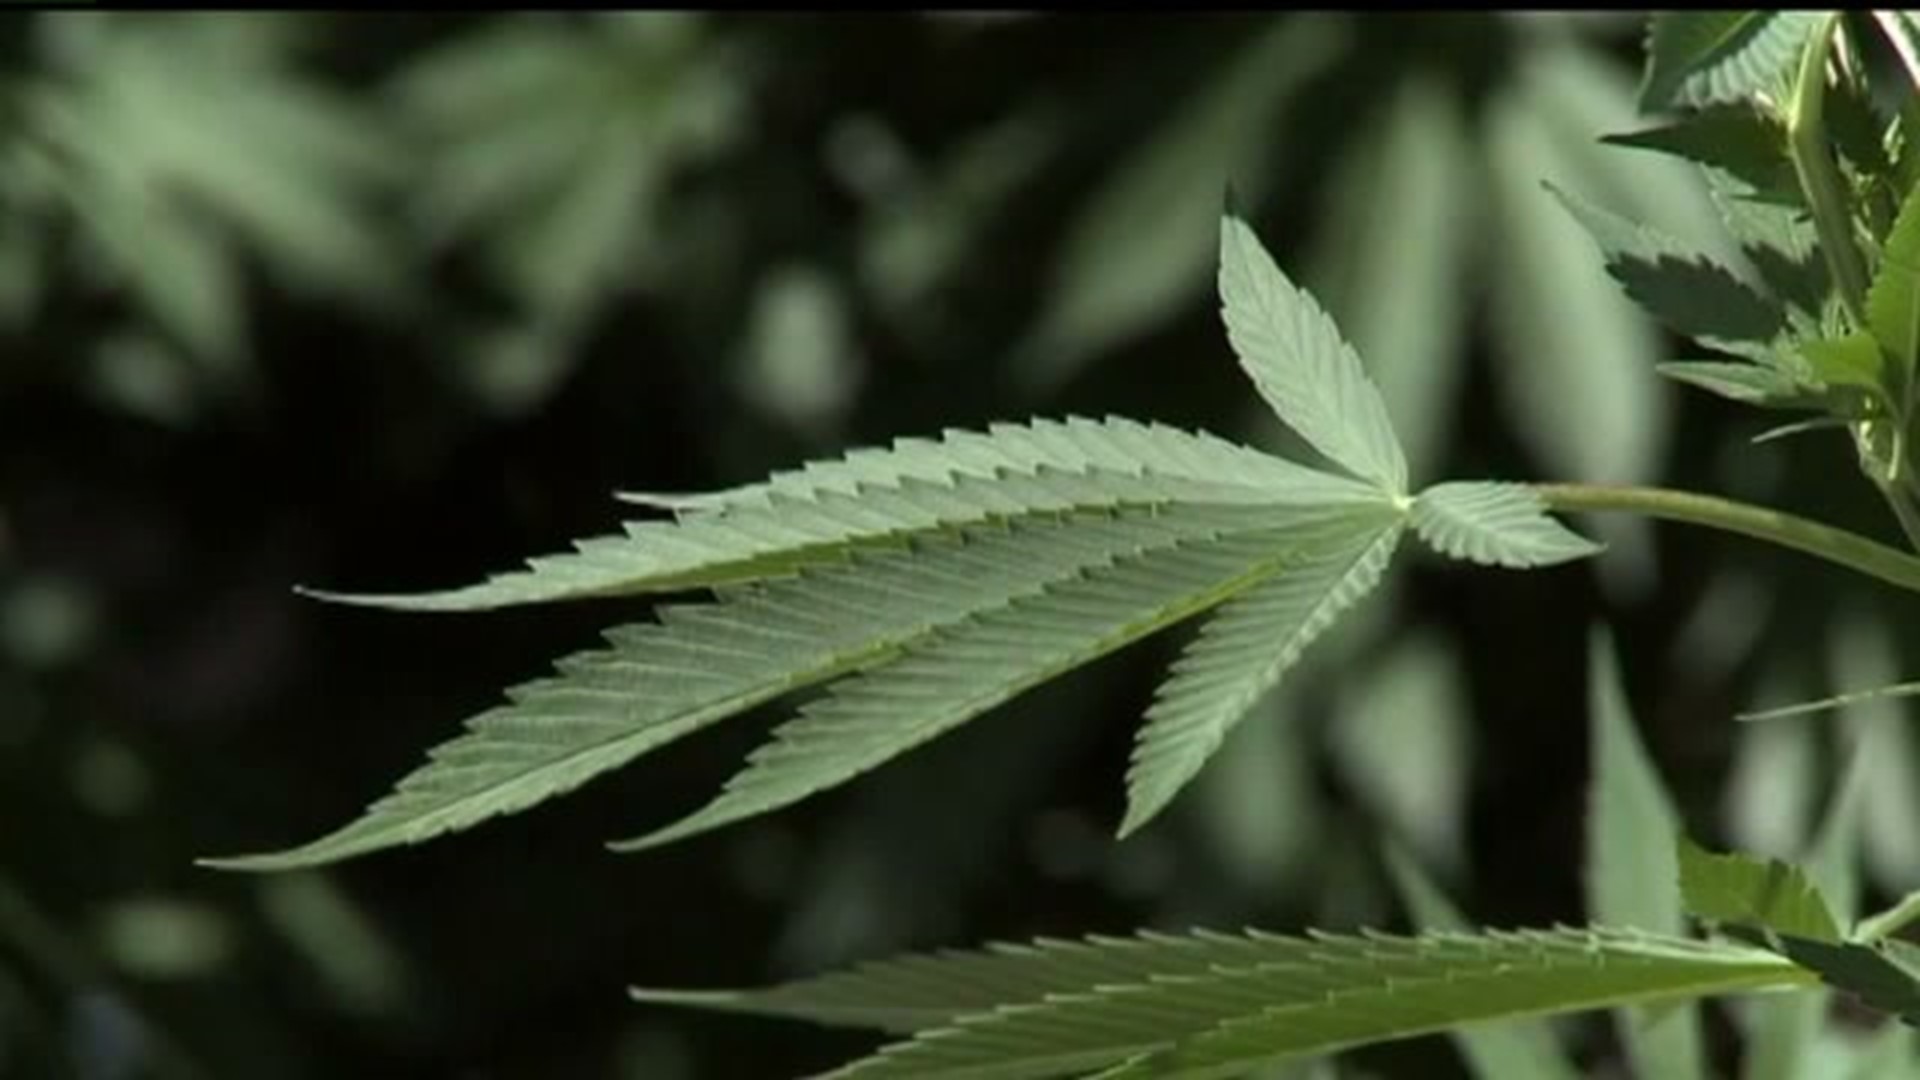 Medical marijuana producers could set up shop in Carlisle